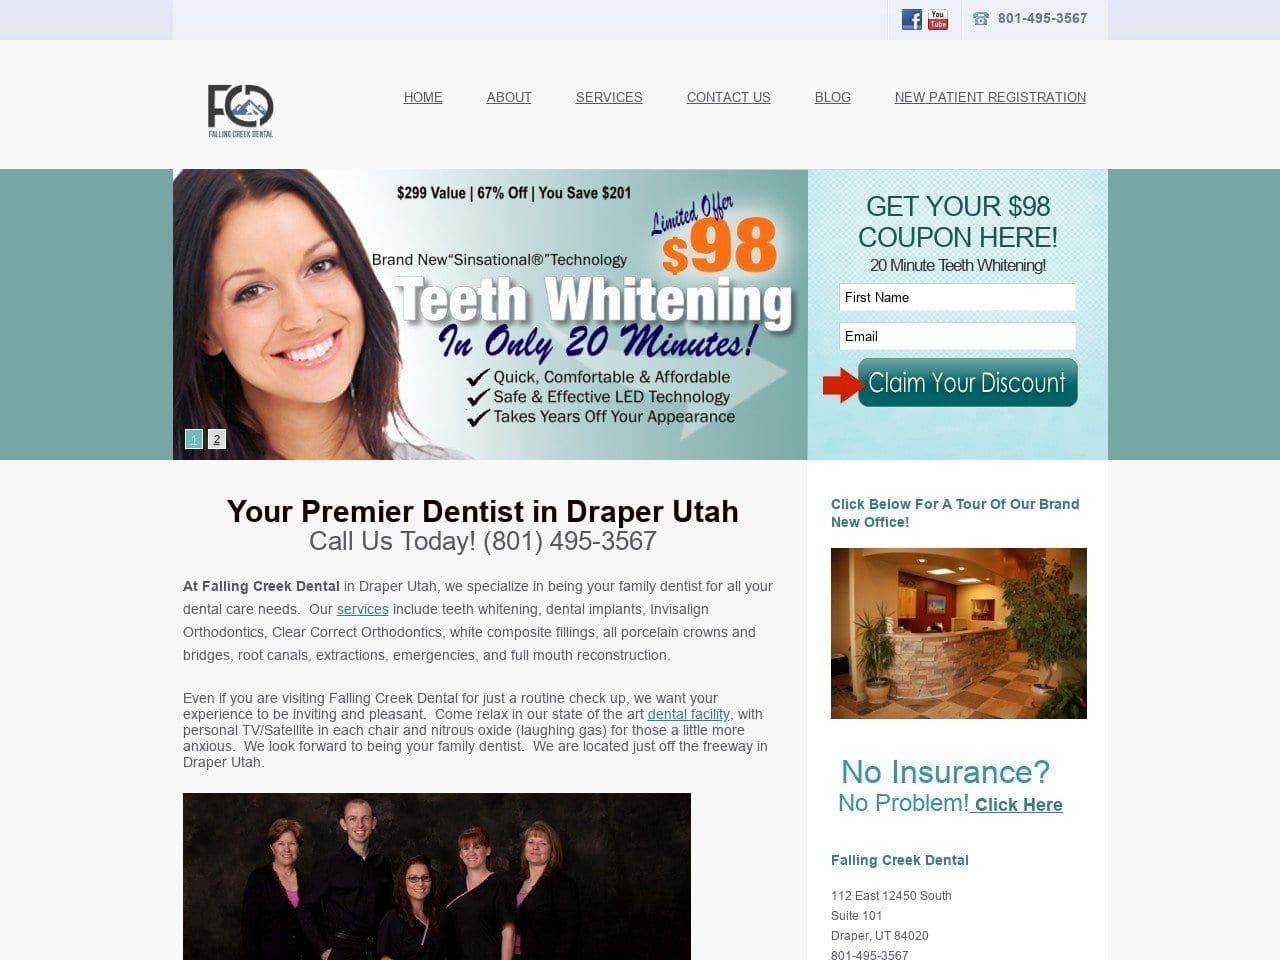 Falling Creek Dental Website Screenshot from fallingcreekdental.com